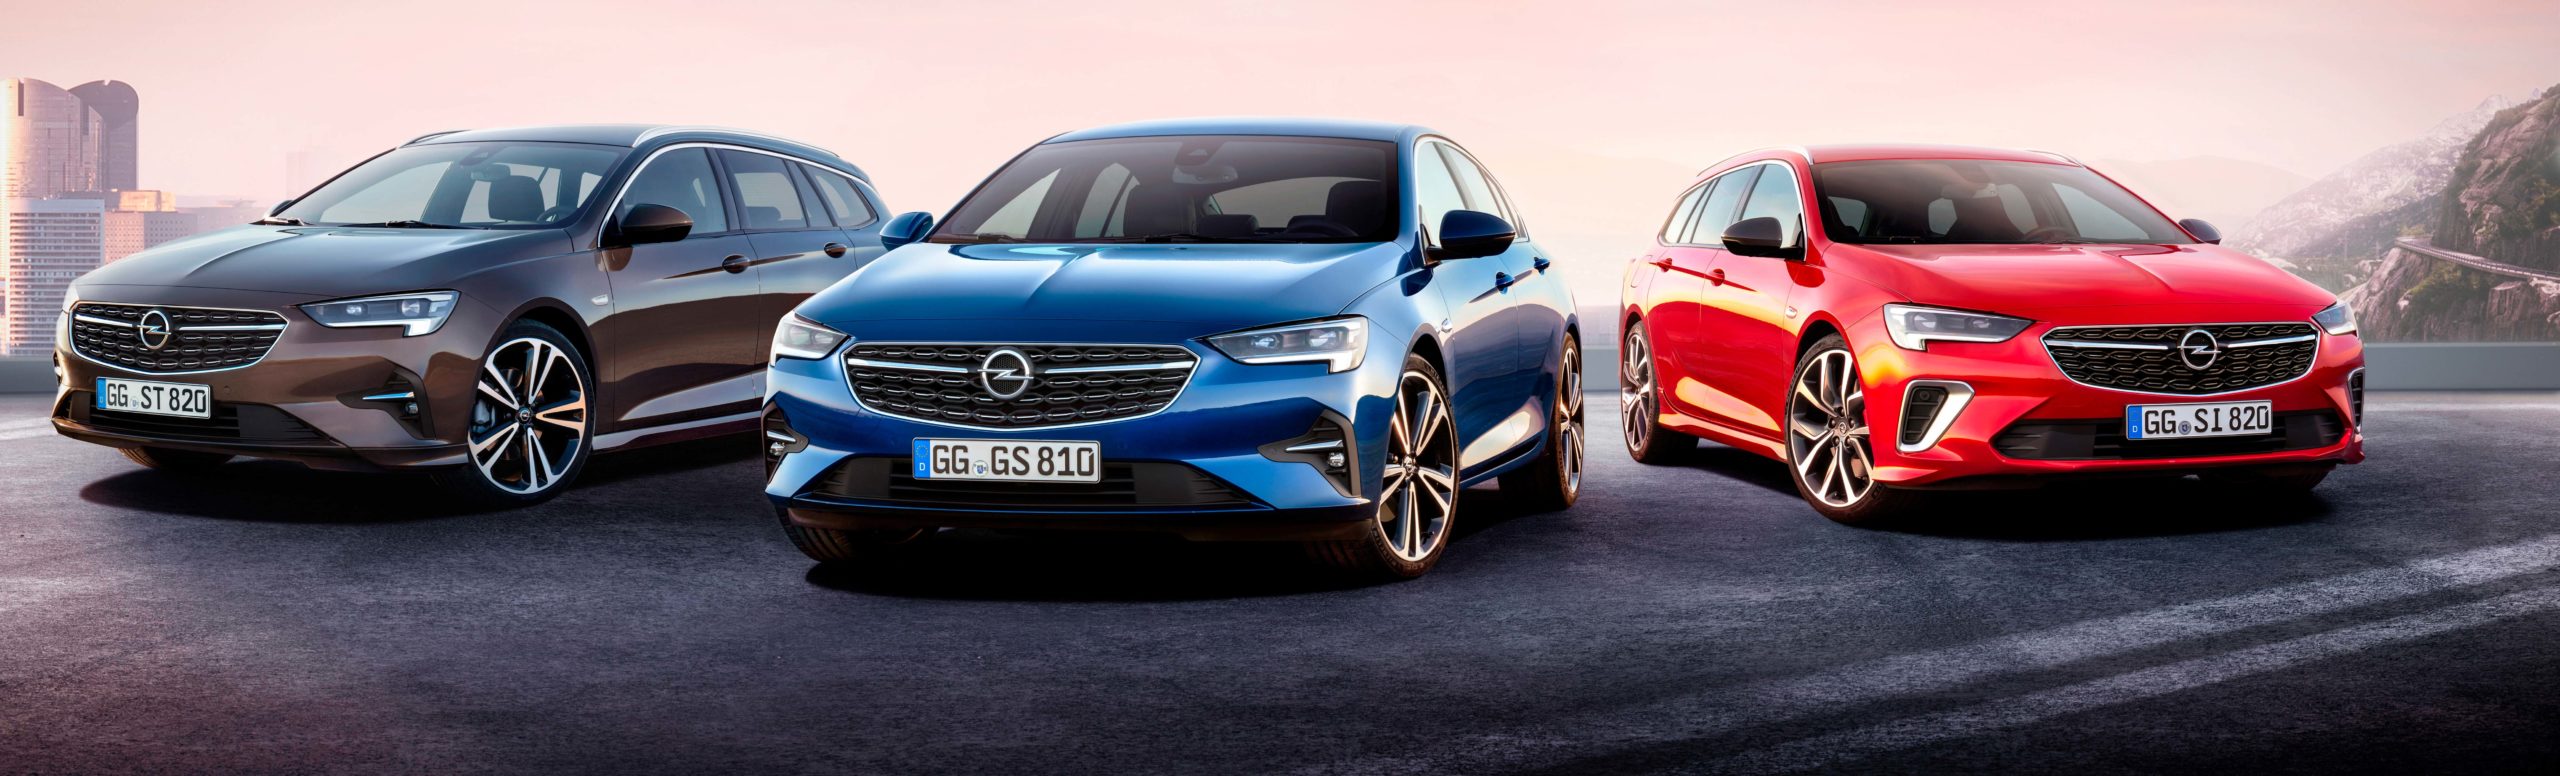 Nuevo Opel Insignia, ya admite pedidos